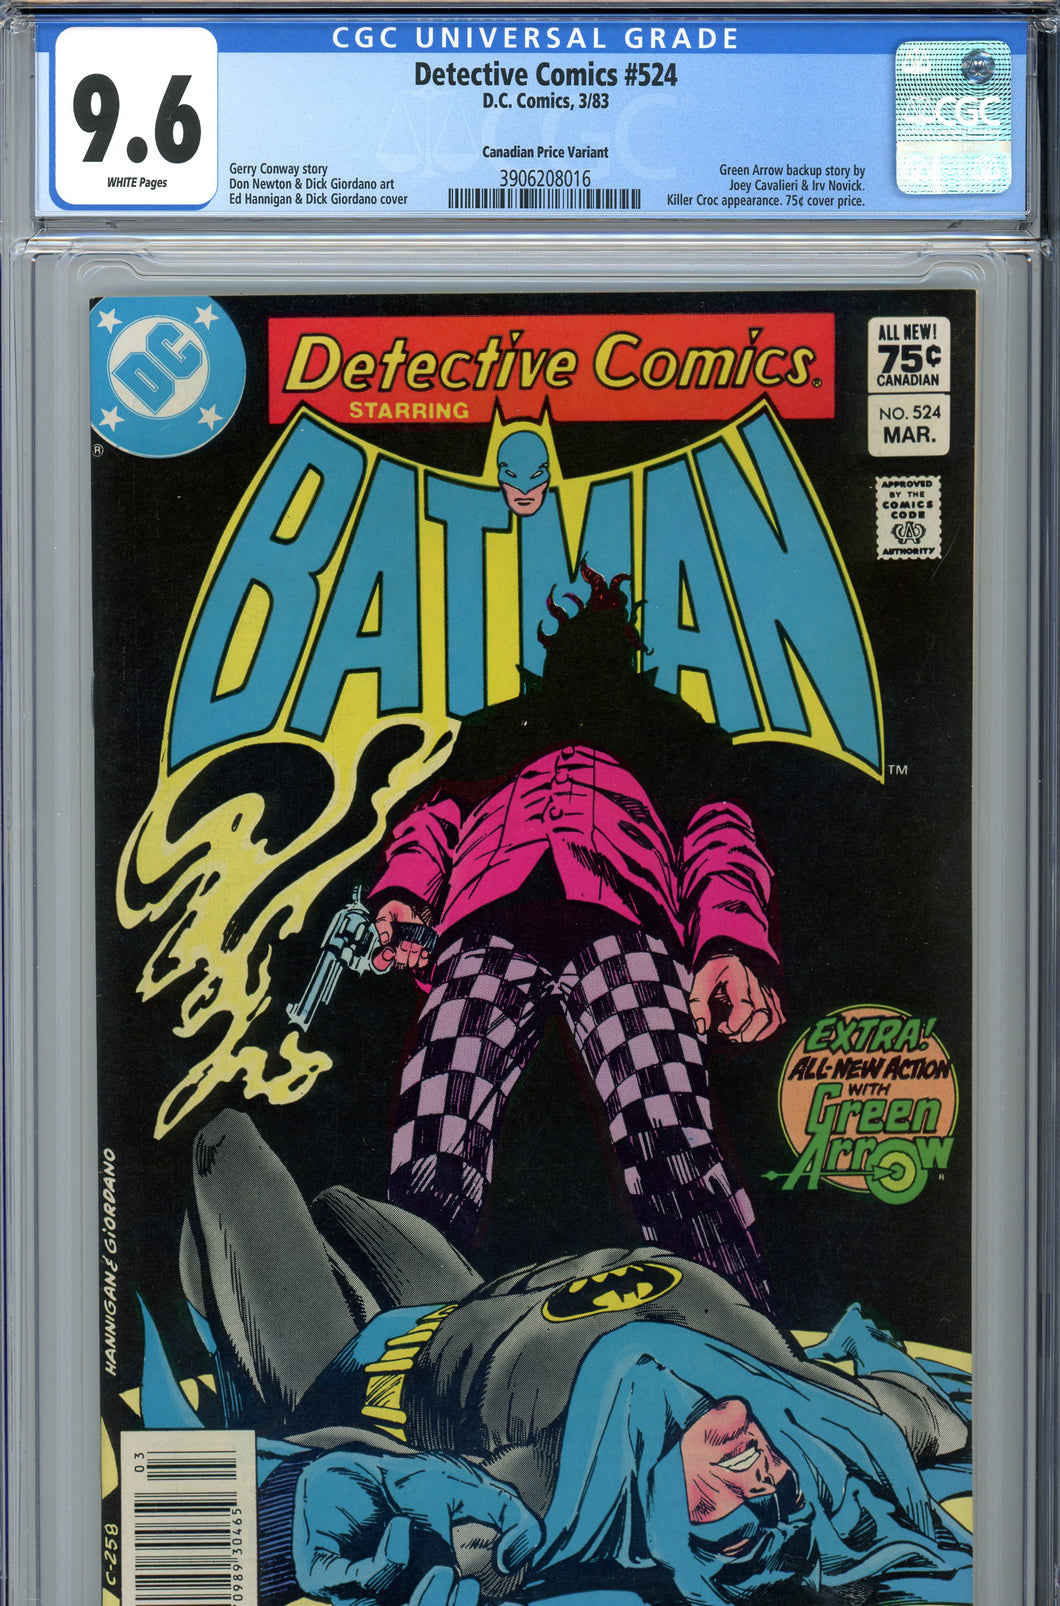 Detective Comics #524 CGC 9.6 Canadian Price Variant